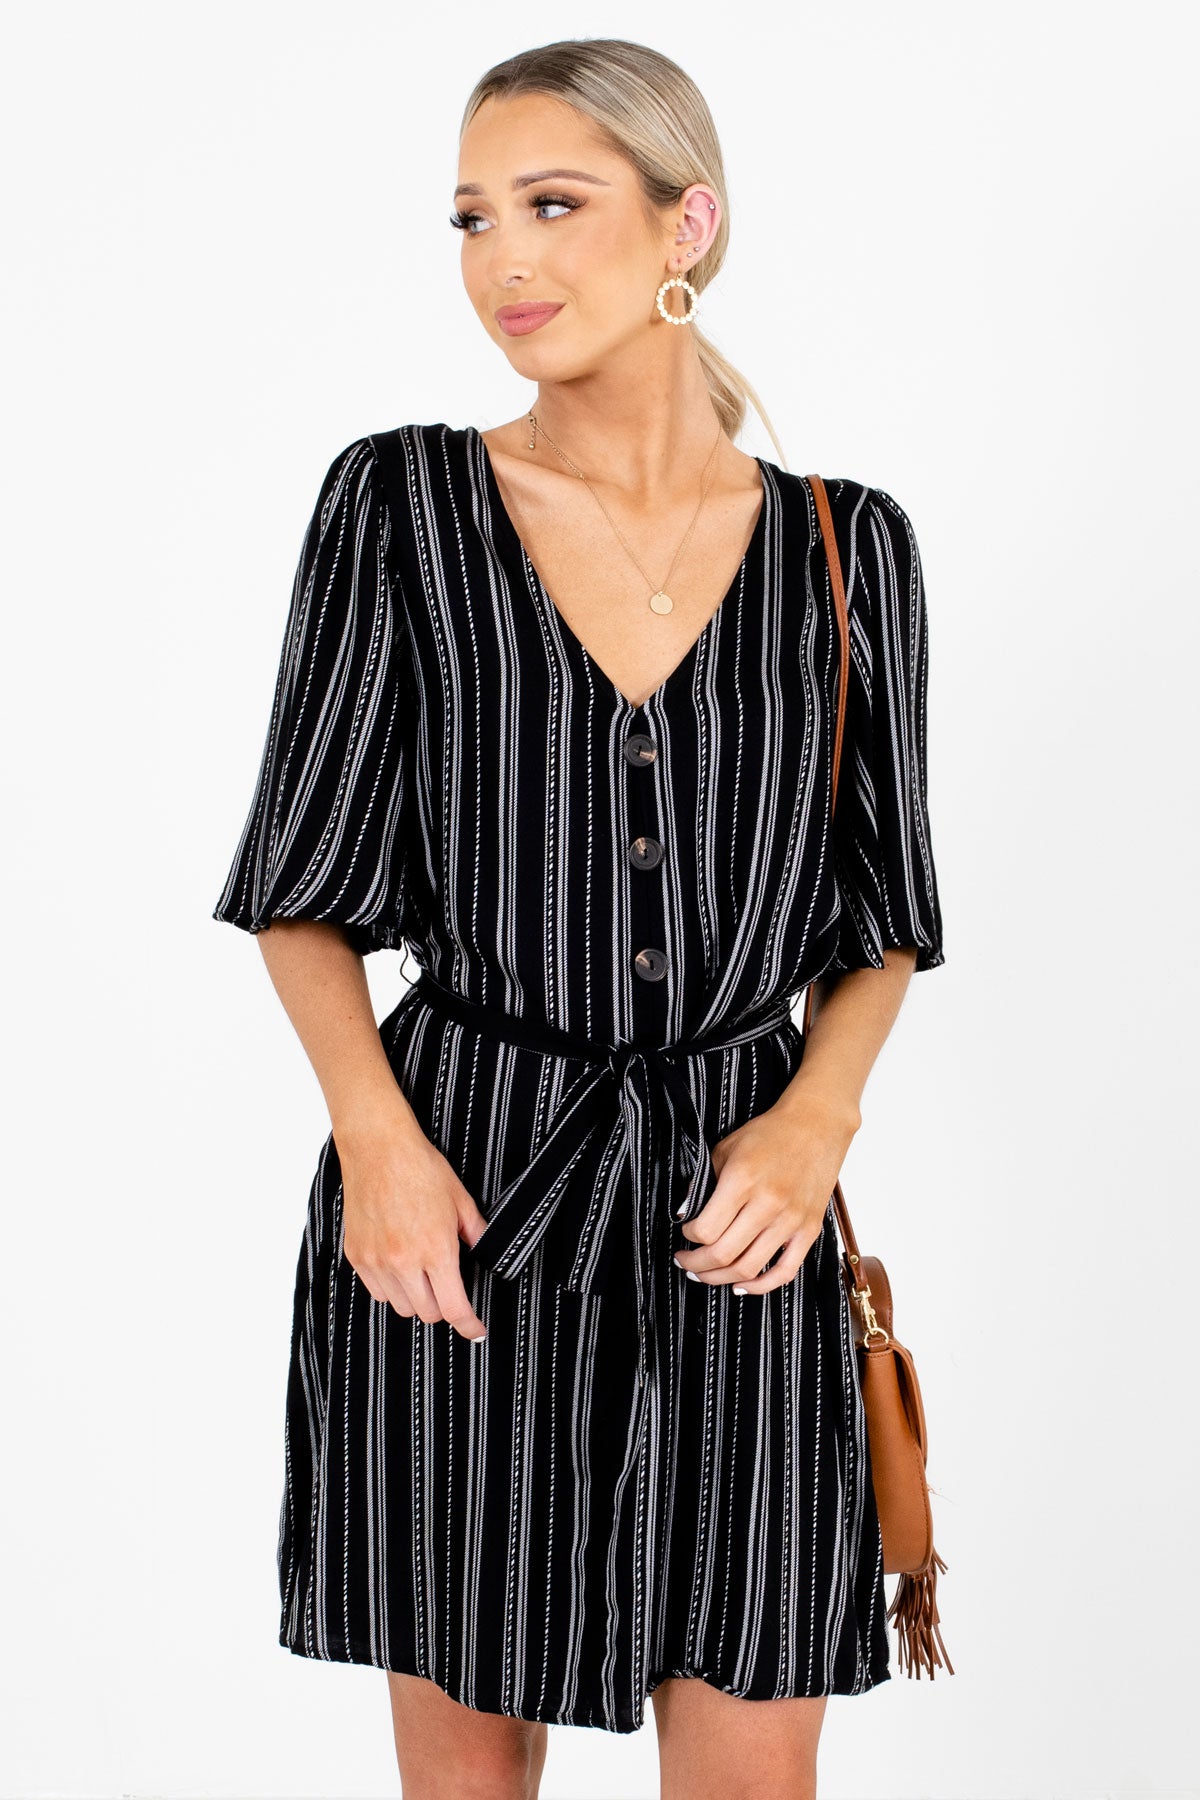 Black and White Striped Boutique Mini Dresses for Women